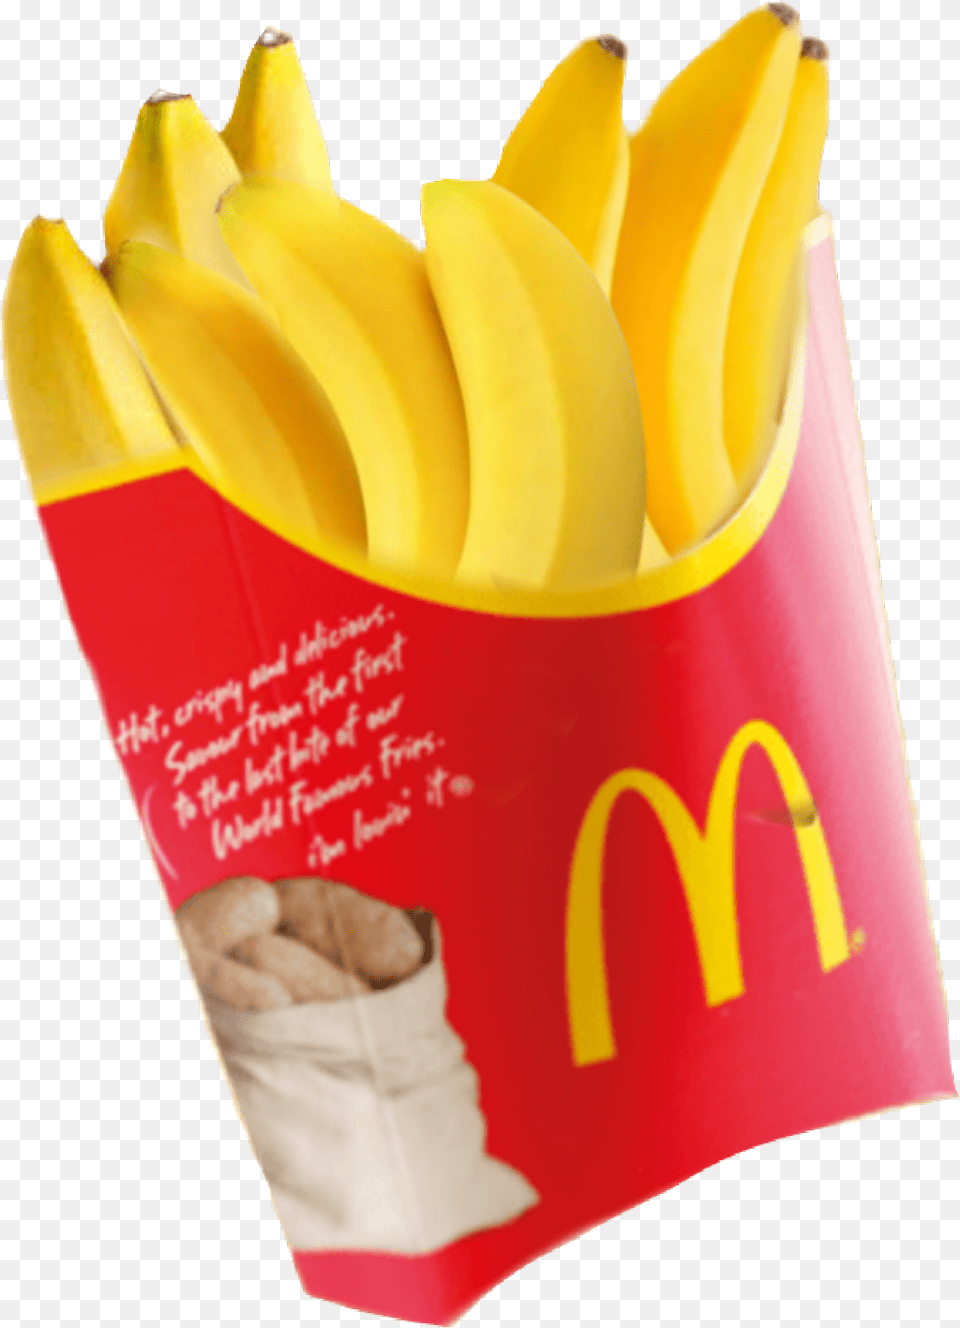 Banana Bananas Fries Friese Mcdonalds Mcdonald Medium Mcdonalds Fries Uk, Food, Fruit, Plant, Produce Free Png